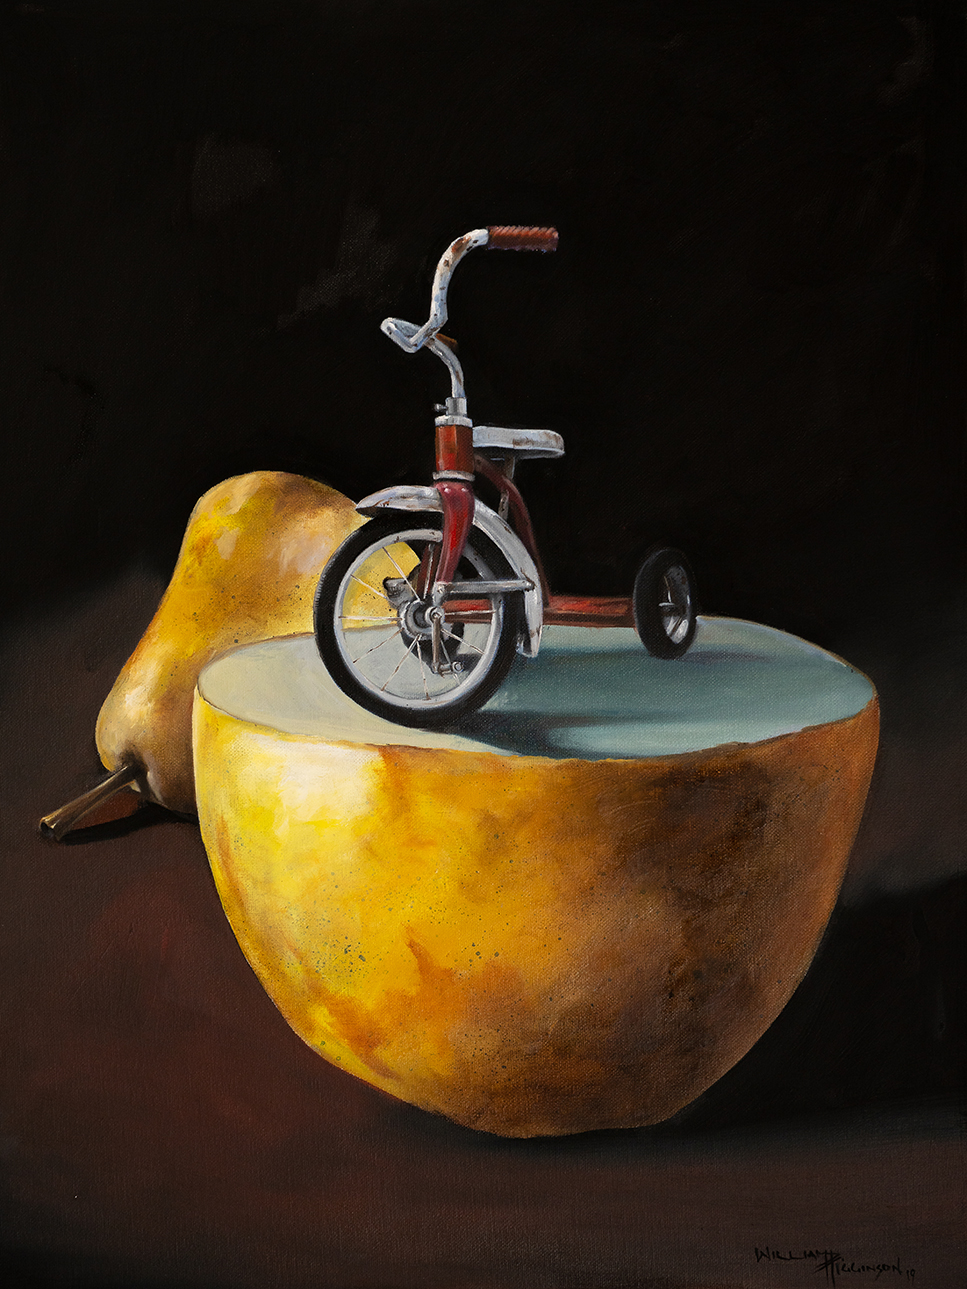 Pyriforma incubandi tres wheeler surrealism oil painting william d higginson.jpg